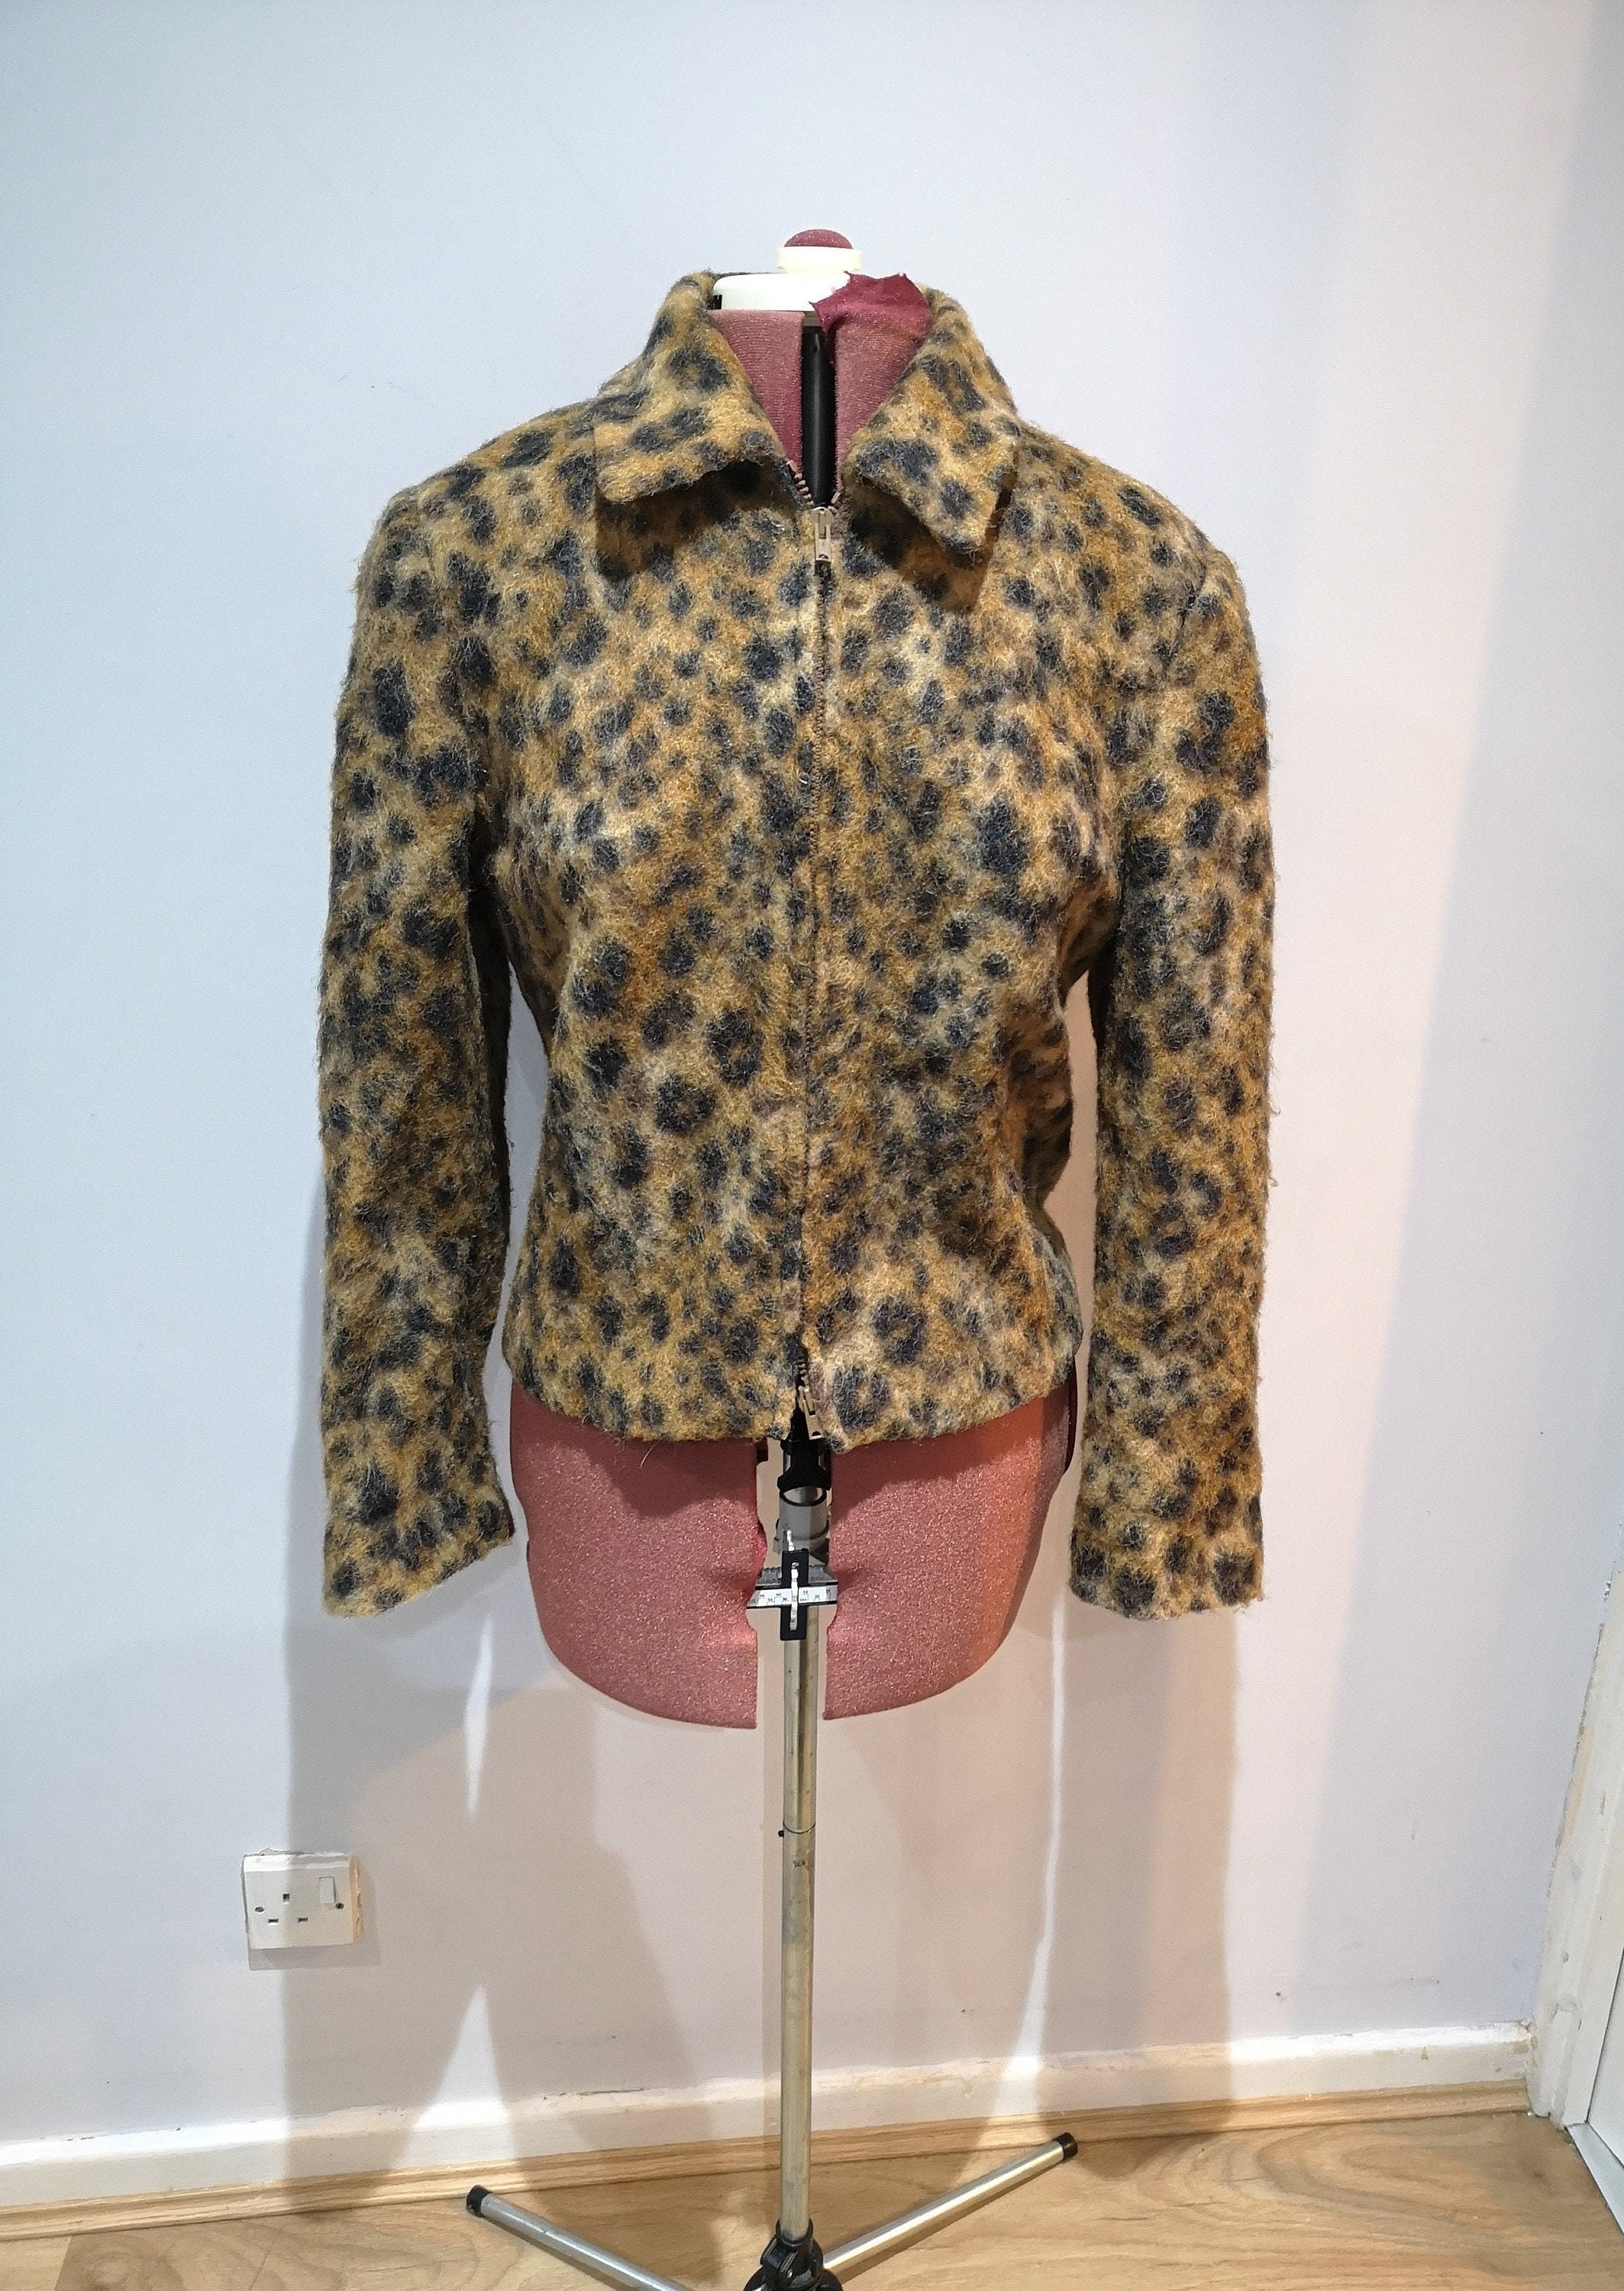 Leopard Print Cropped Pant - Olsen Fashion Canada